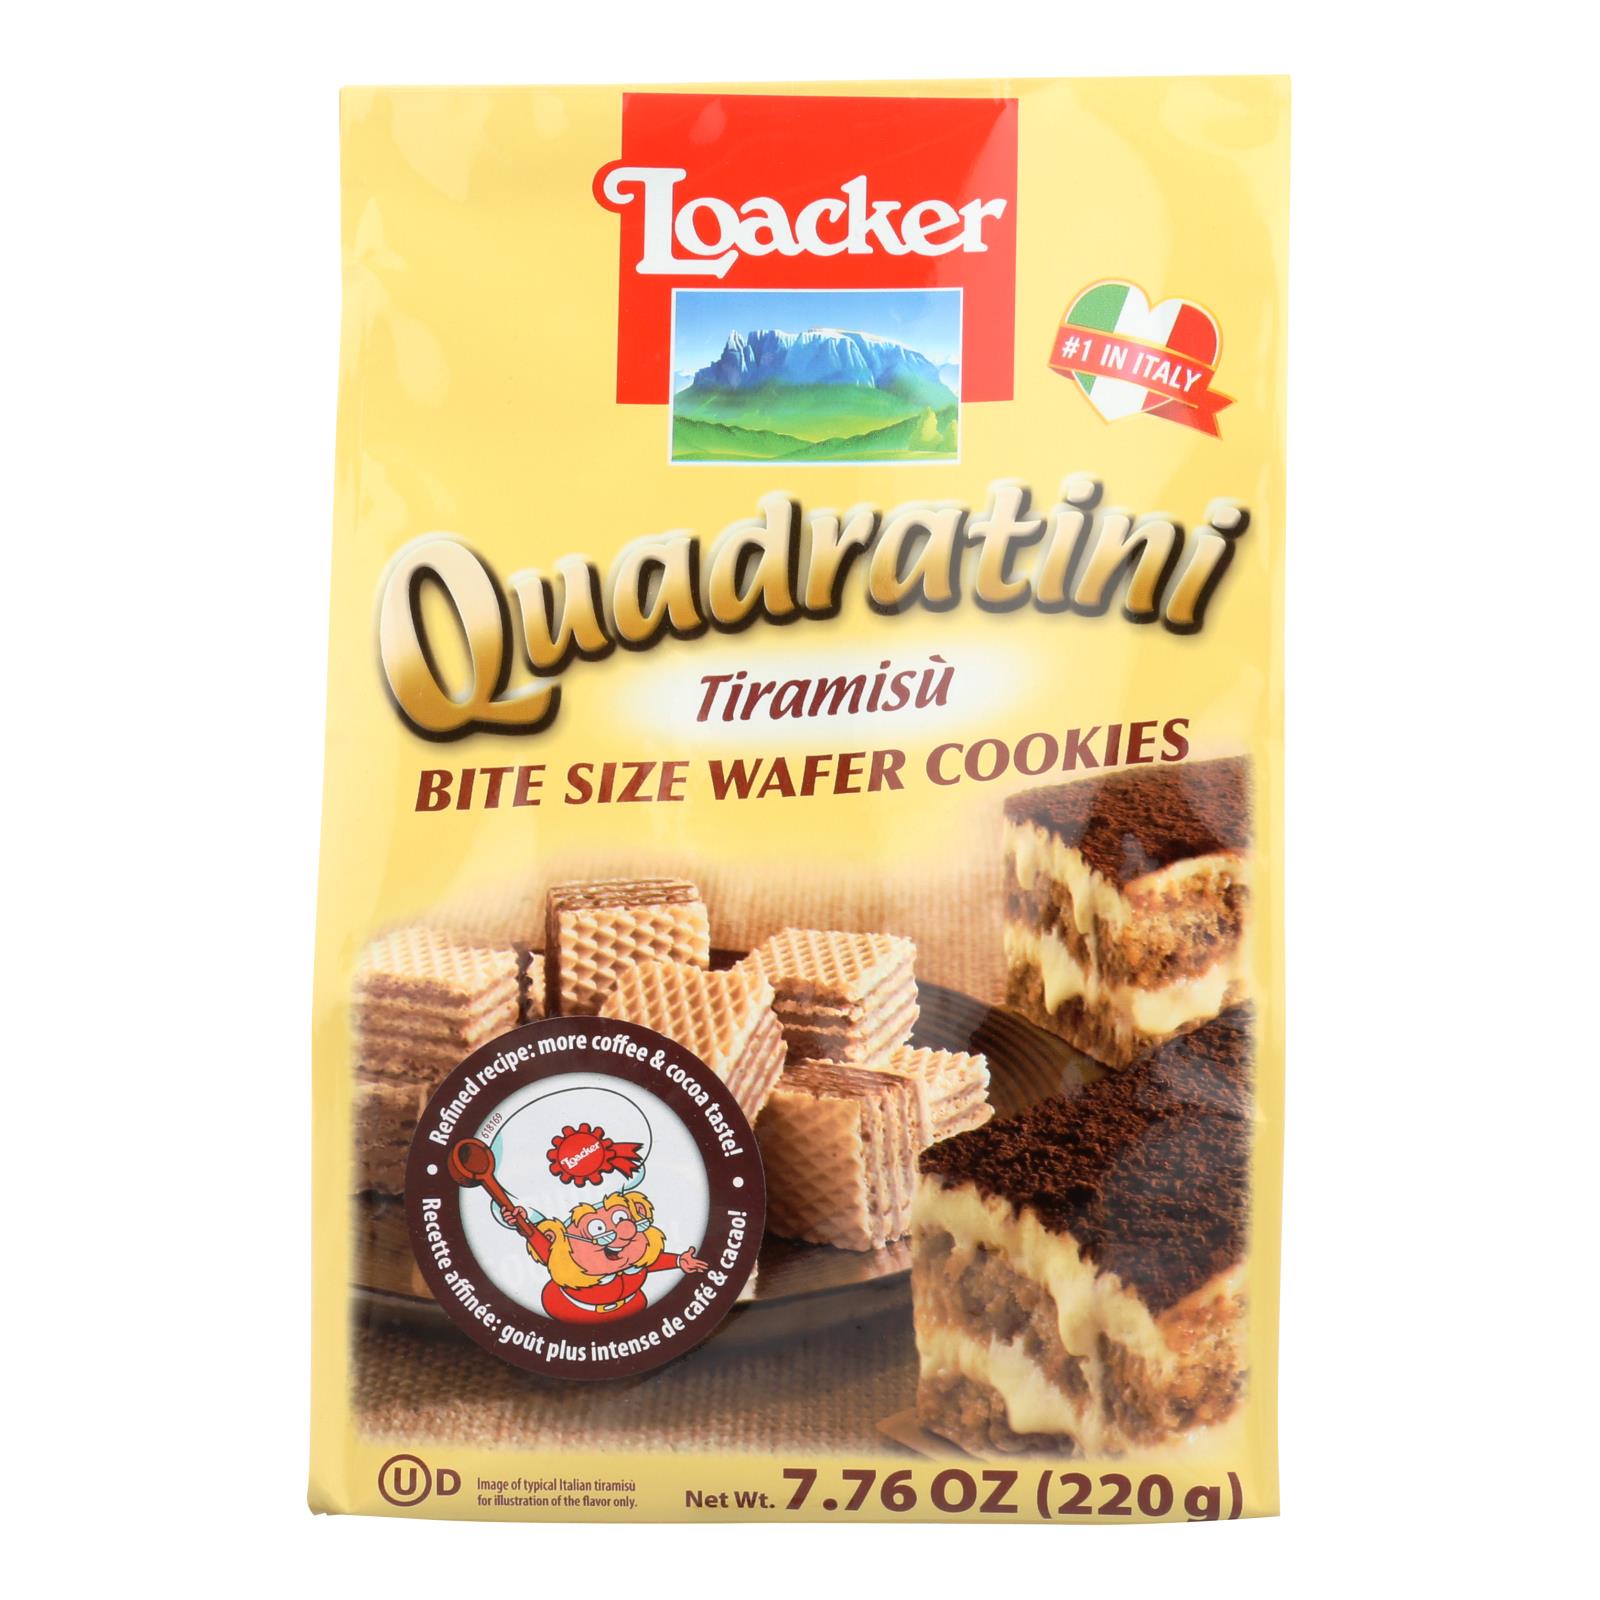 Loacker Quadratini Tiramisu Bite Size Wafer Cookies - 6개 묶음상품 - 7.76 OZ